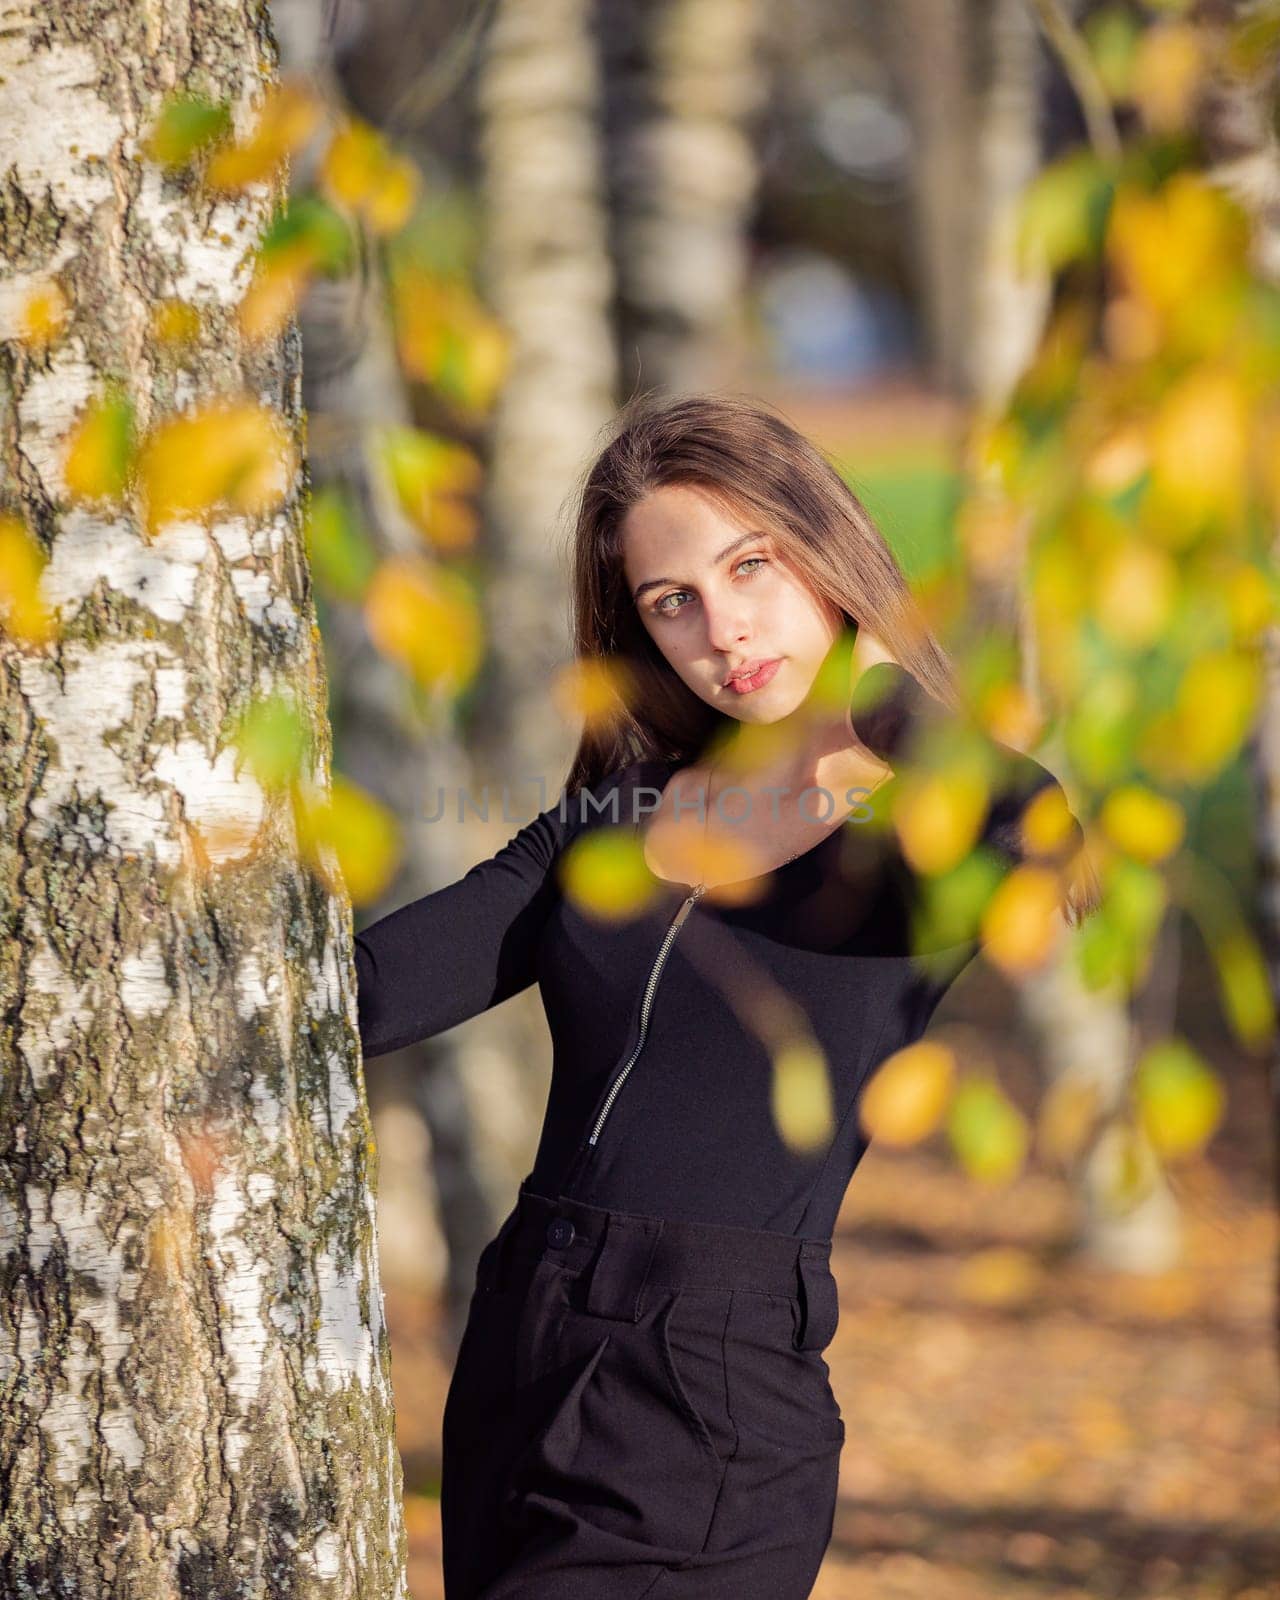 A beautiful girl posing near a birch tree in an autumn park. by Yurich32